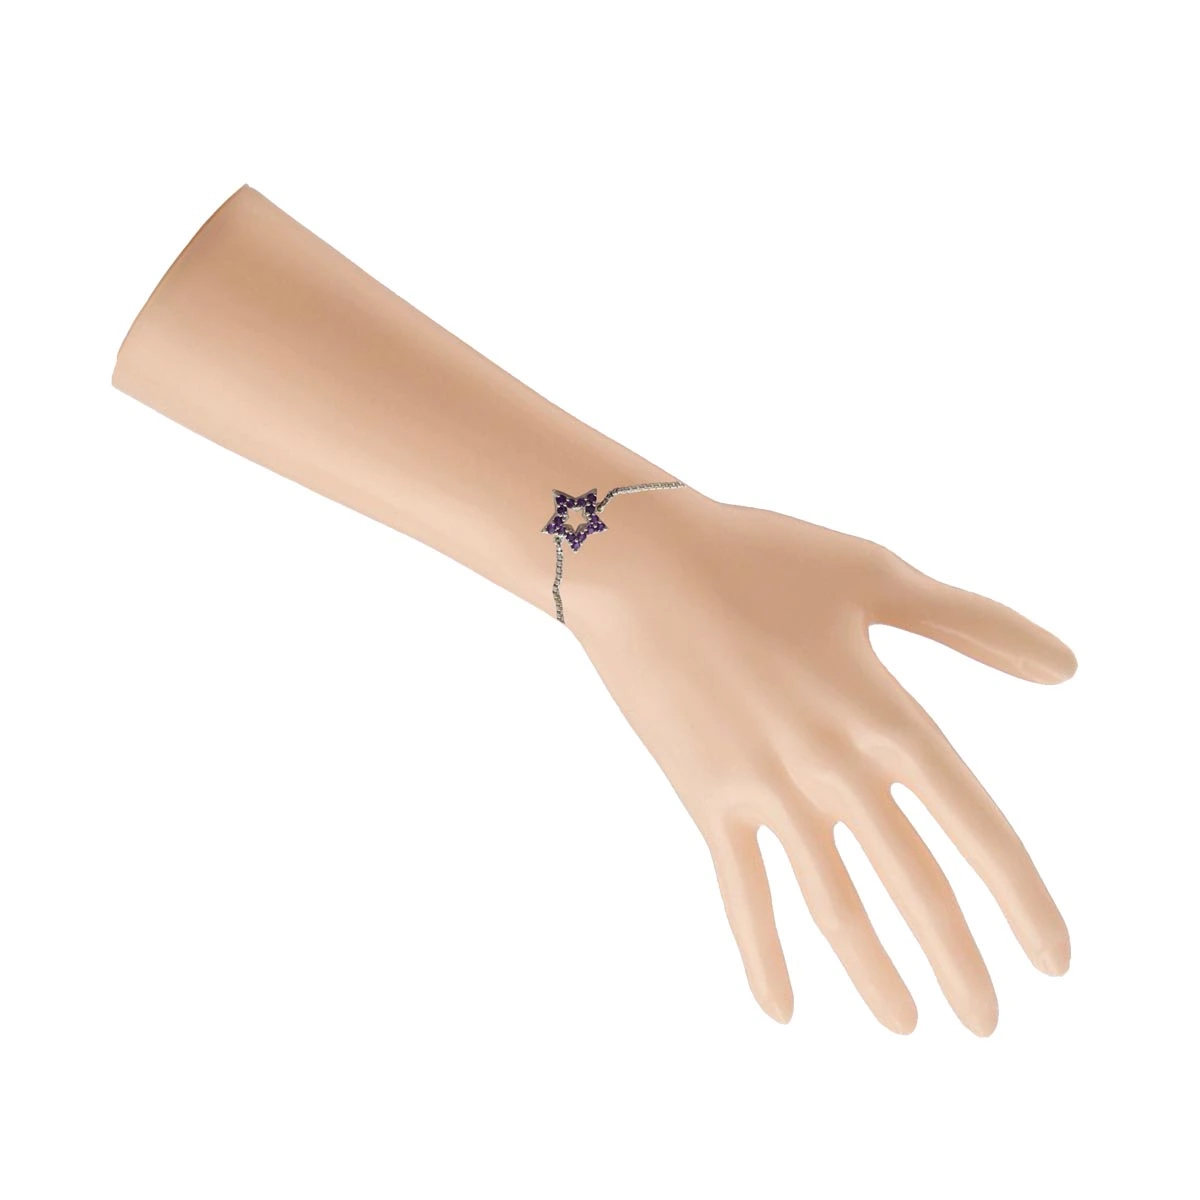 Real Purple Amethyst Star Sterling Silver Bracelet for Women and Girls (SLBR16)